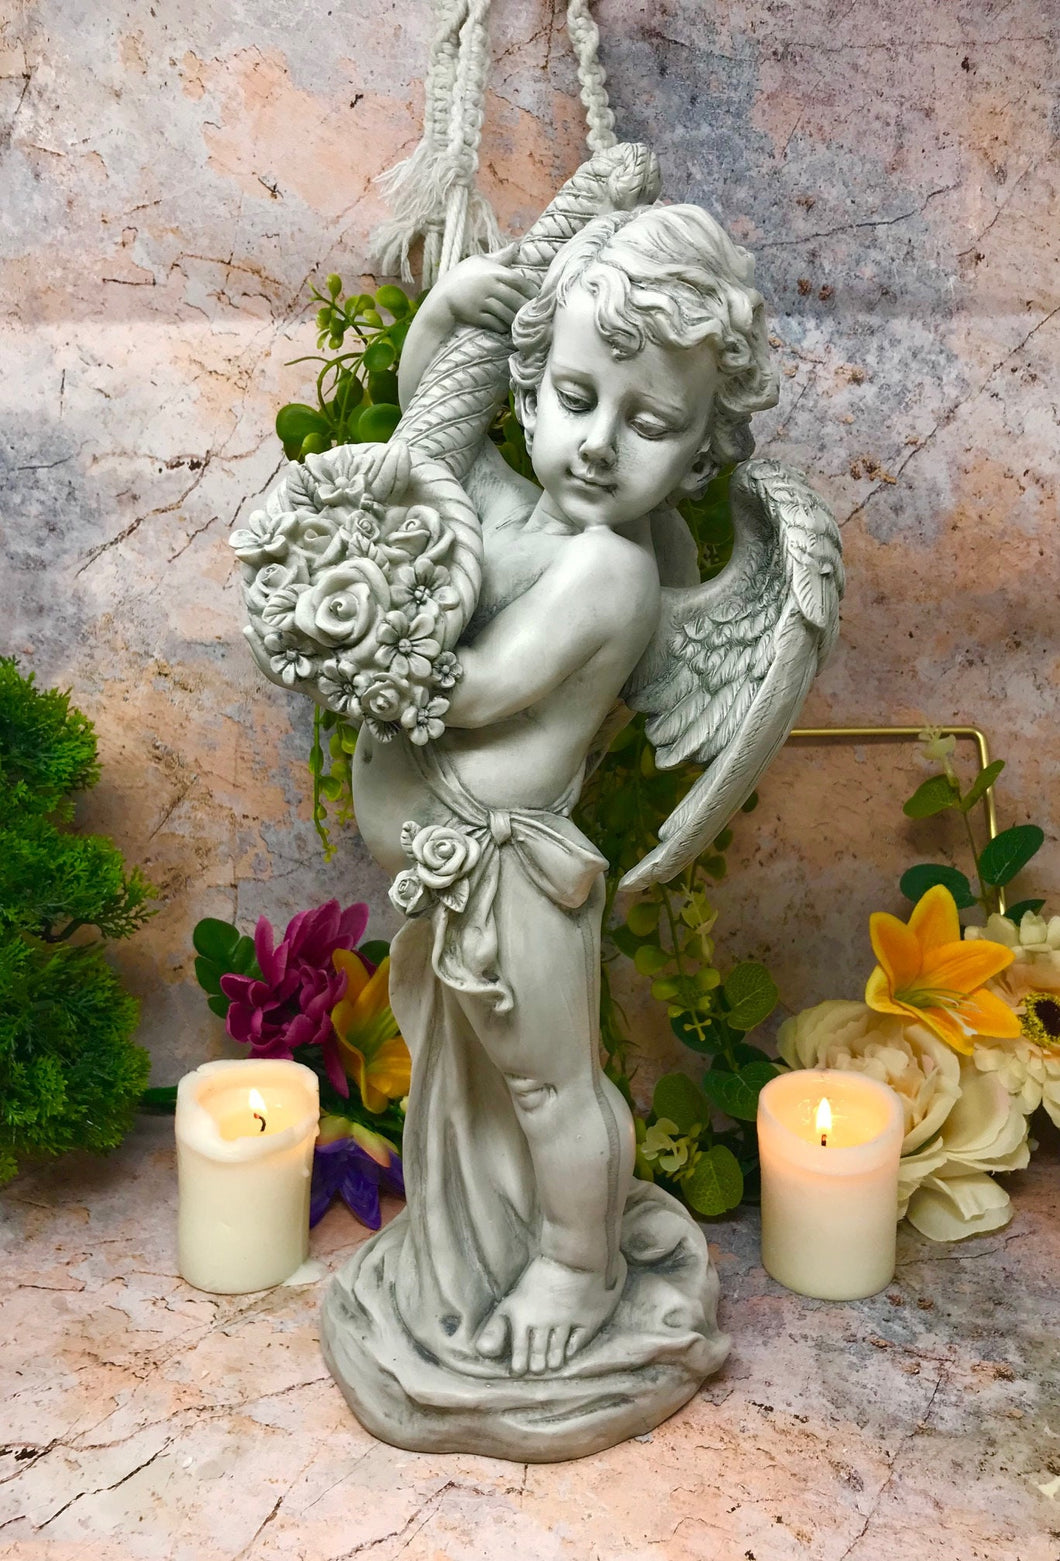 Guardian Angel Figurine Cherub Grave Ornament Statue Sculpture Statue